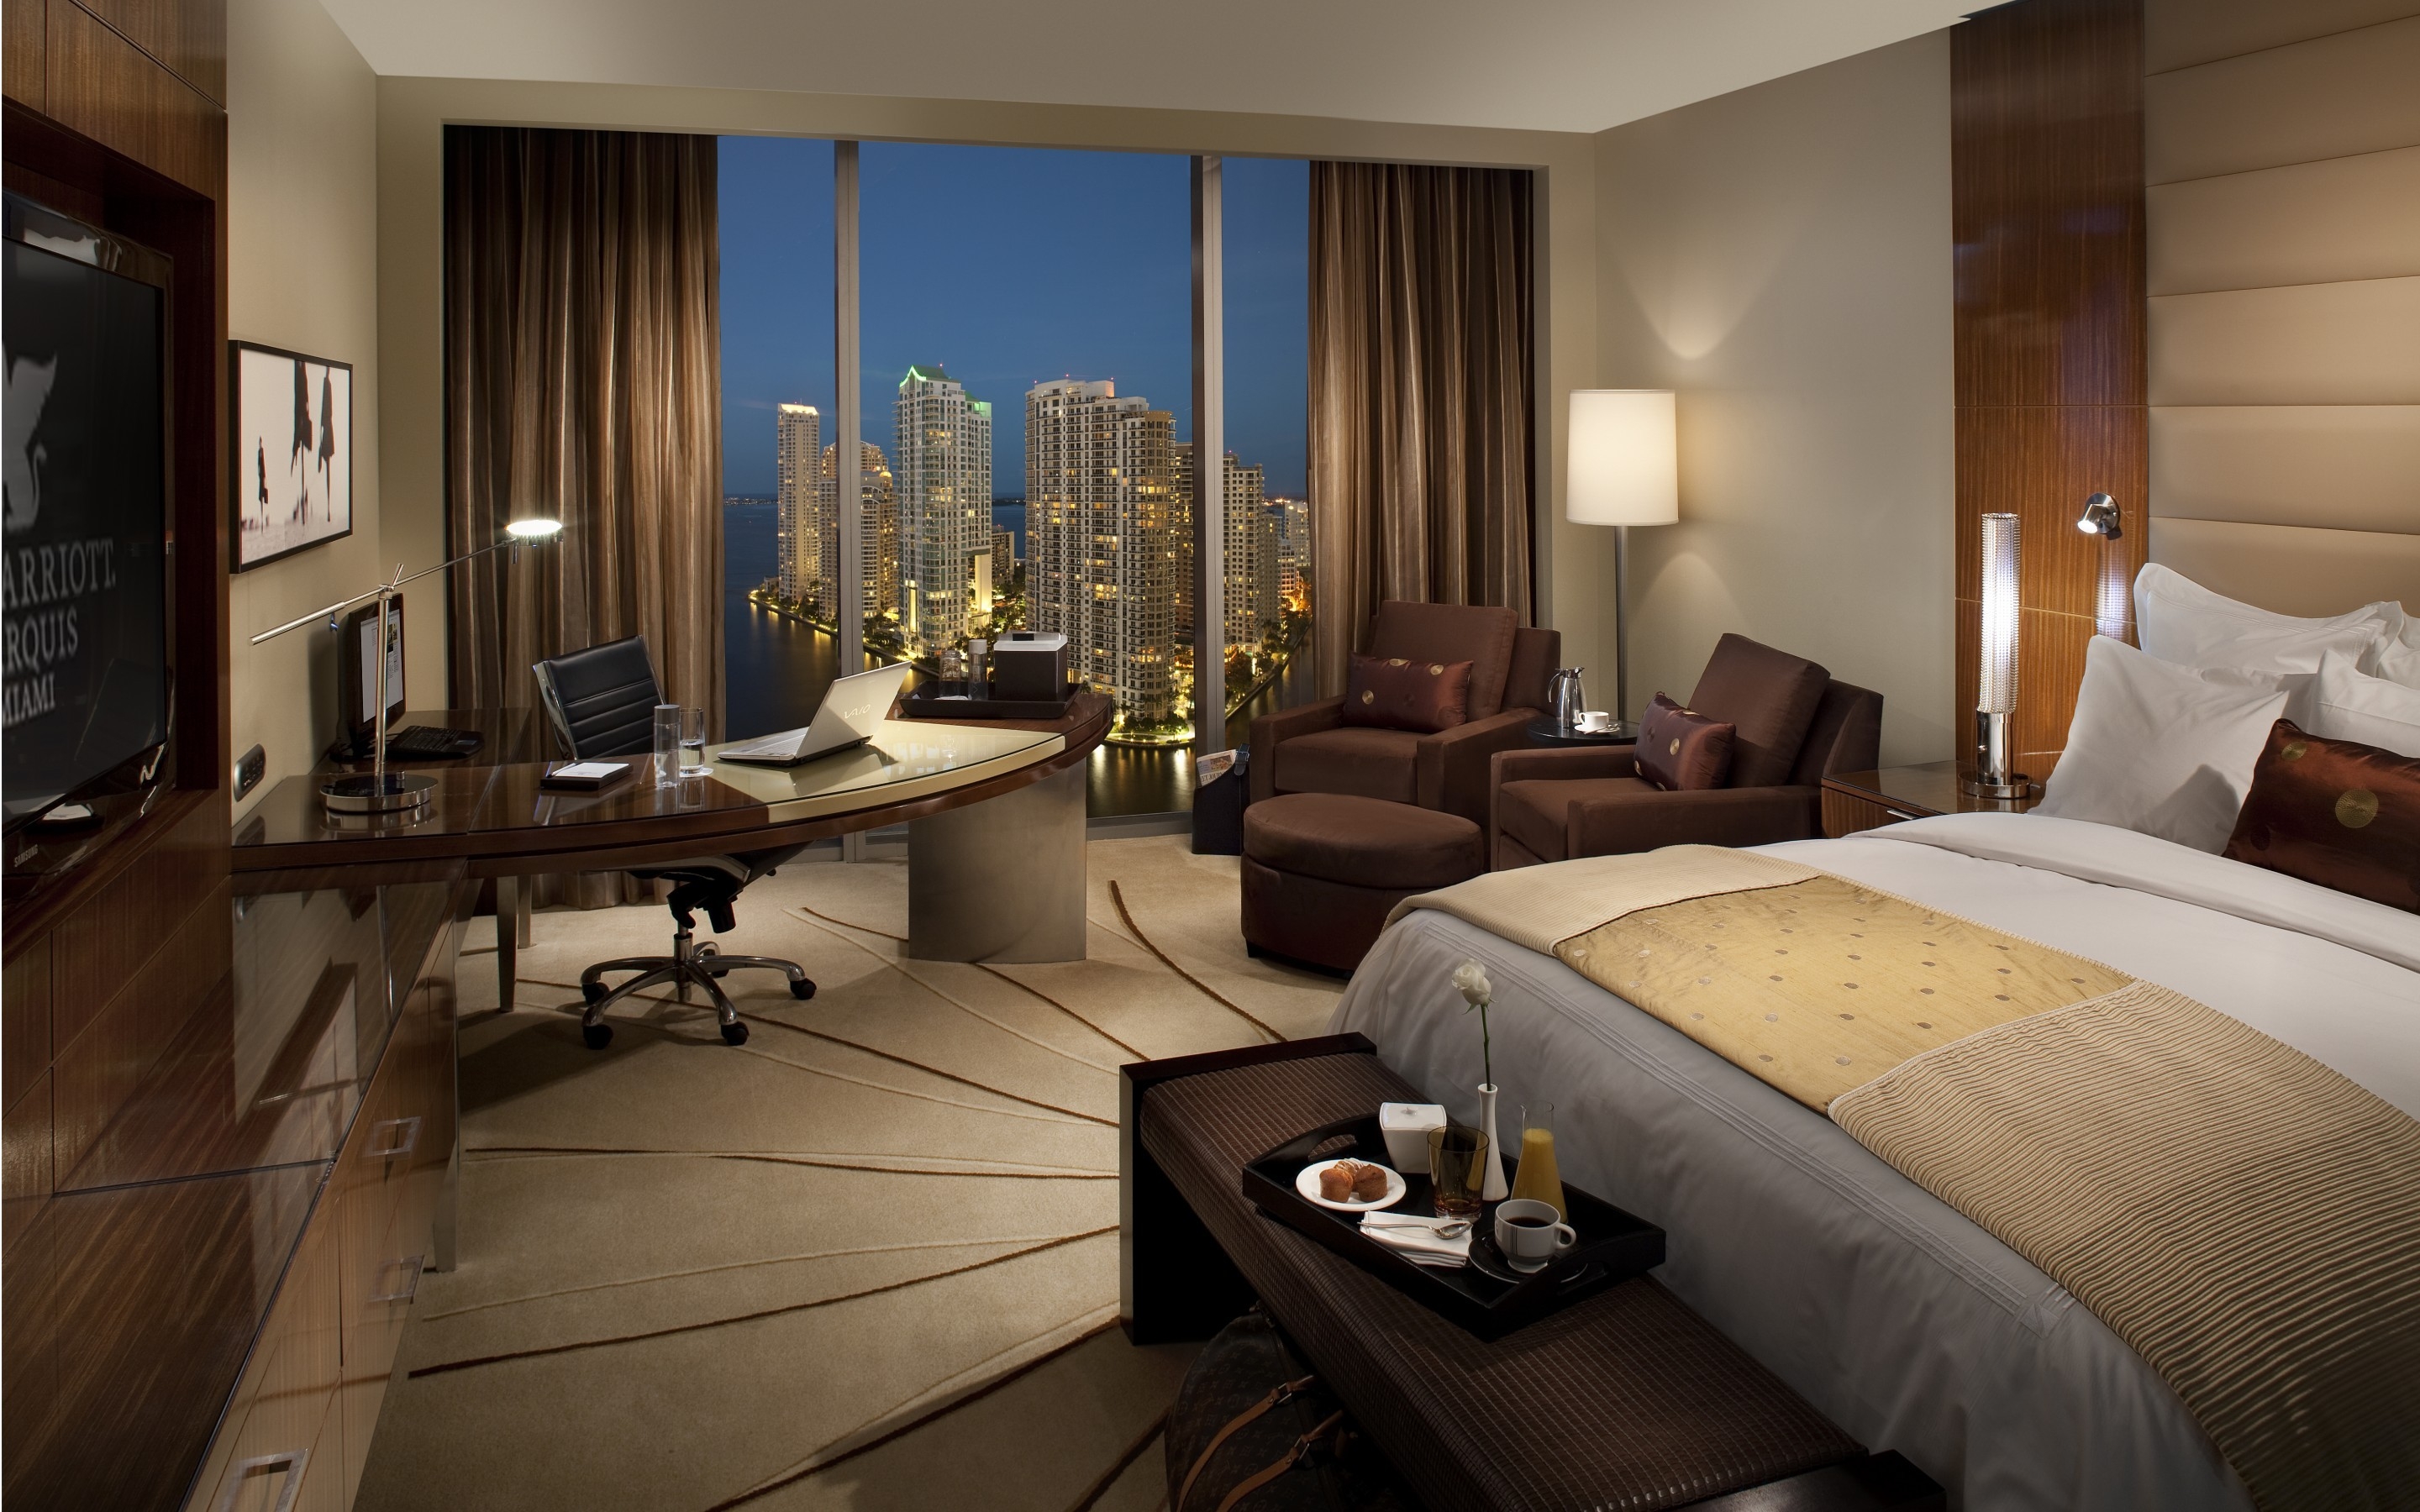 Miami Florida Hotel Room for 2880 x 1800 Retina Display resolution